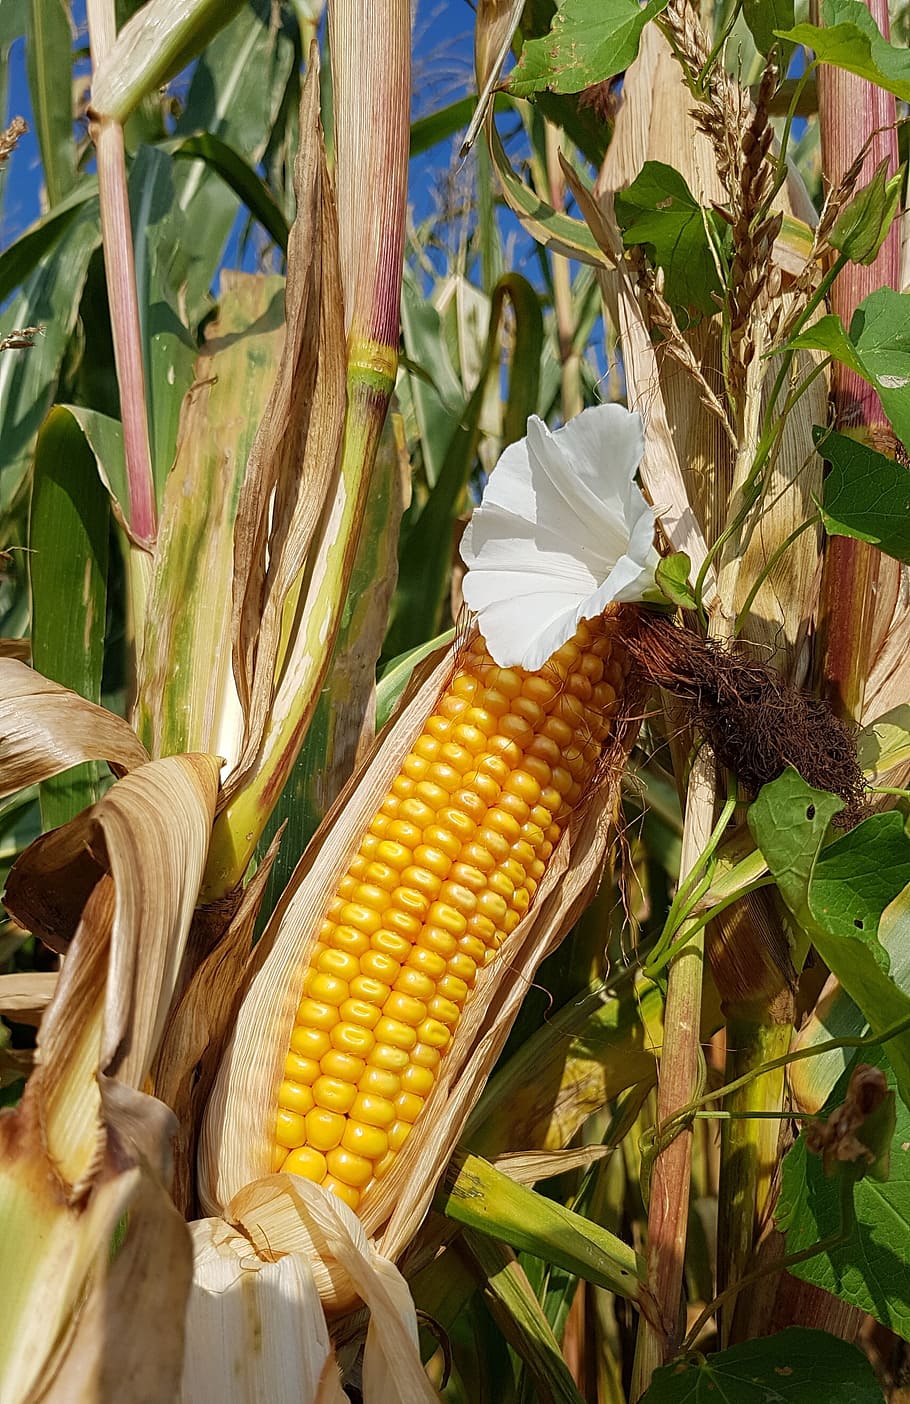 HD wallpaper: cornfield, nature, agriculture, corn plants, fodder maize ...